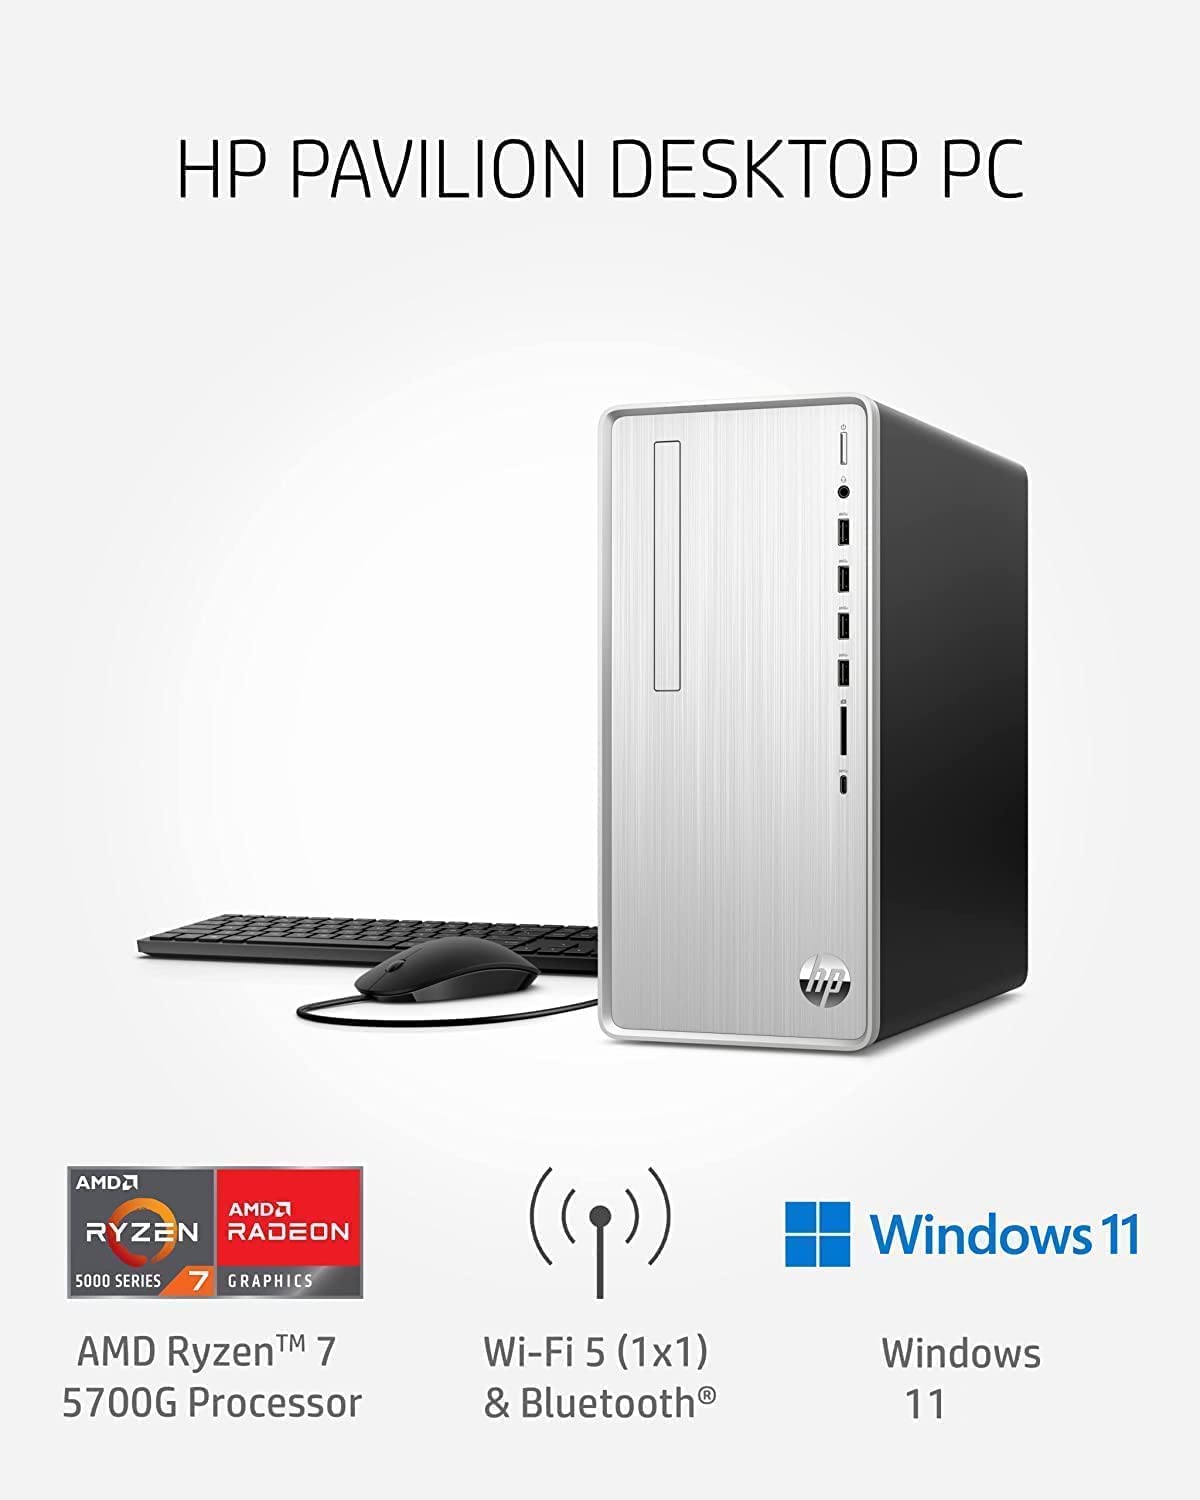 HP 2023 Newest Pavilion Desktop, AMD Ryzen 7 5700G, 16GB RAM, 256GB SSD + 1TB HDD, Wi-Fi 5, Bluetooth, 9 USB Ports, Pre-Built PC Tower, Windows 11 Bundle with JAWFOAL